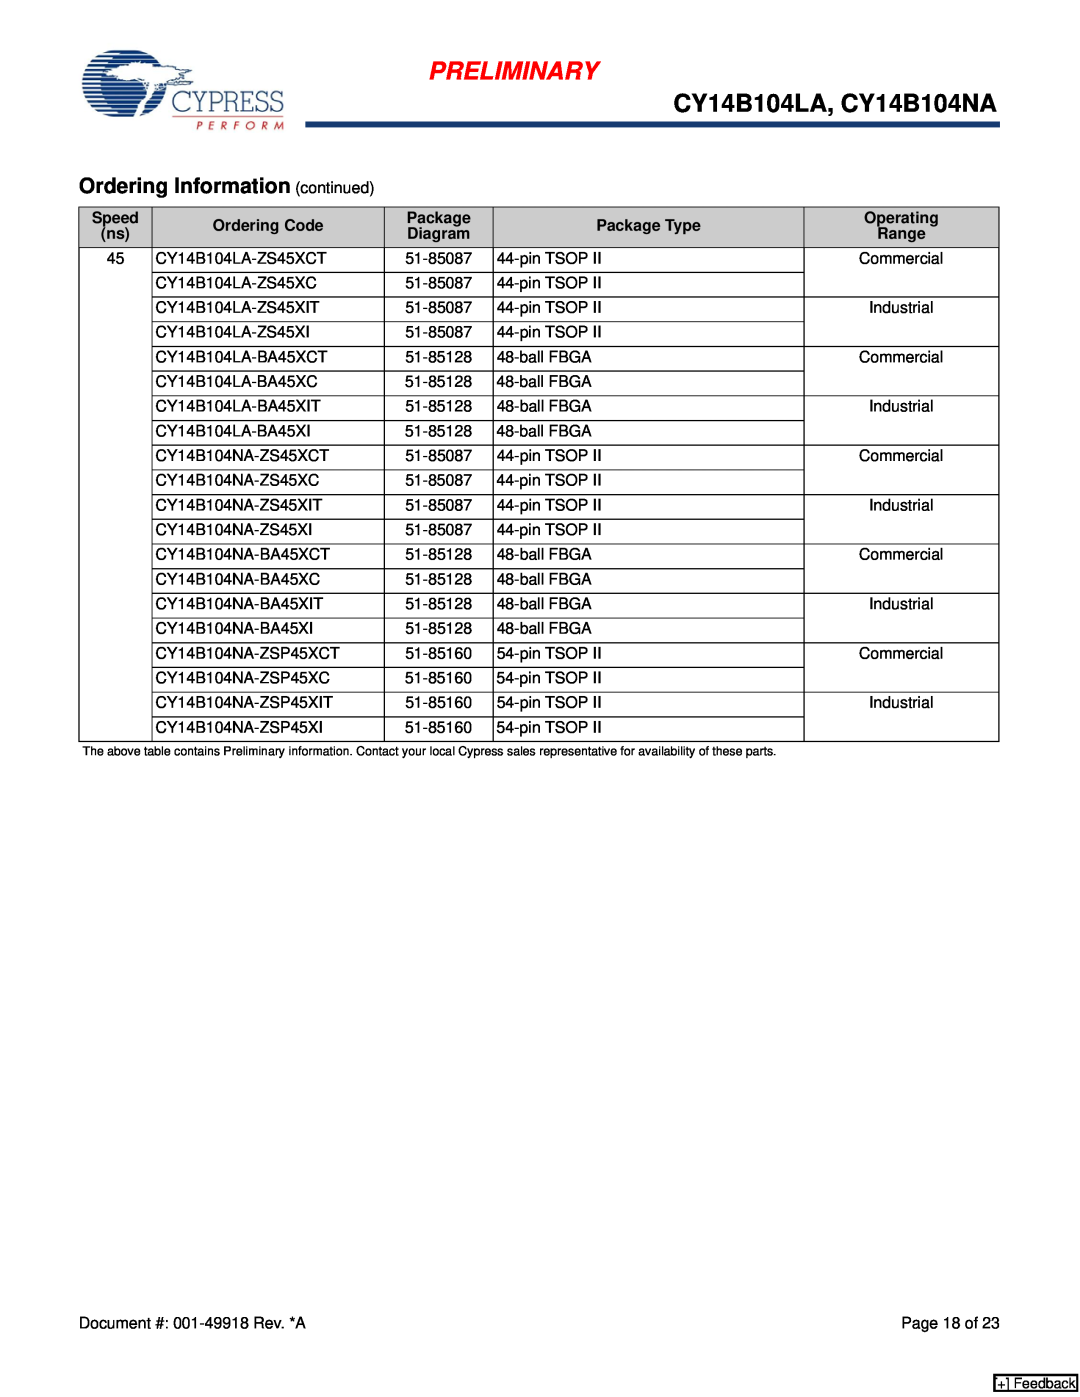 Cypress manual Ordering Information continued, Preliminary, CY14B104LA, CY14B104NA 